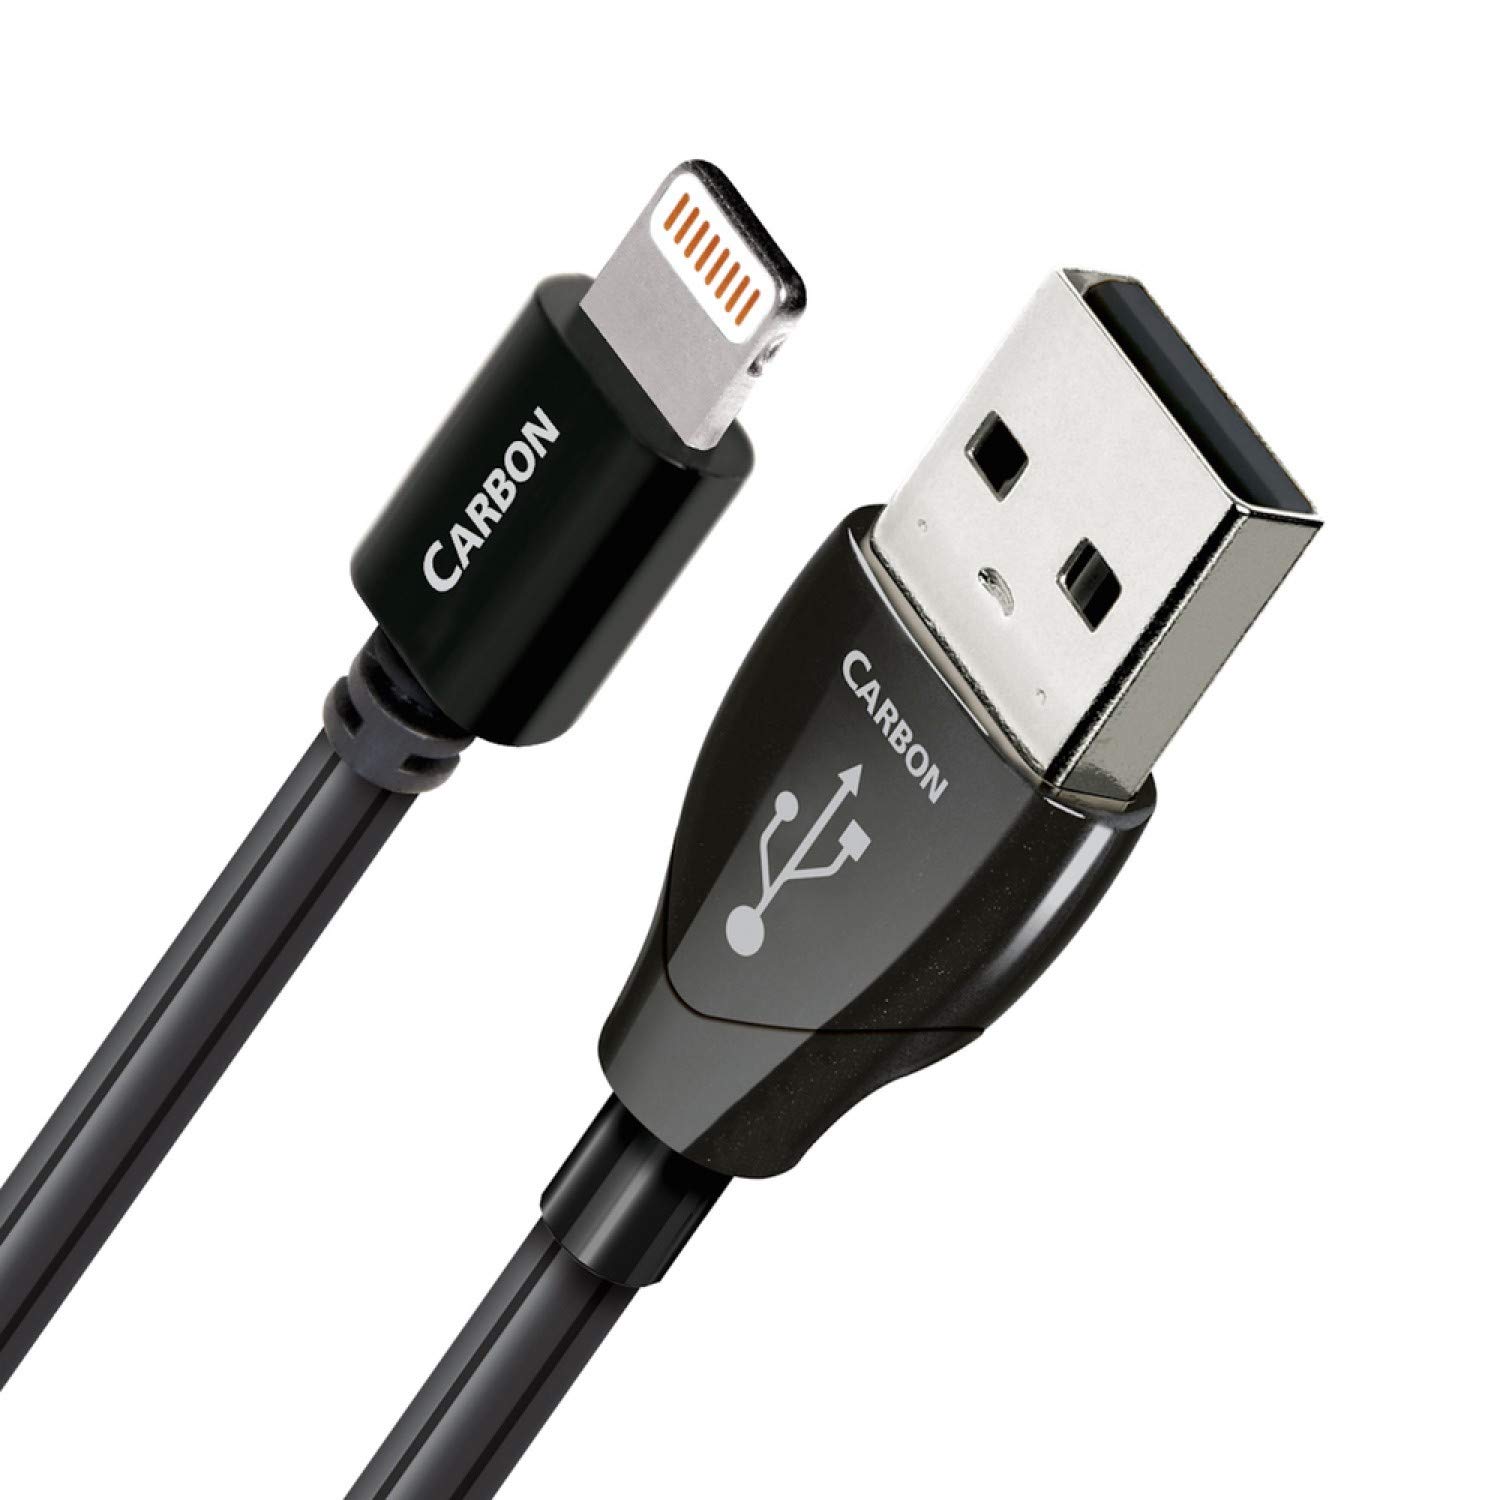 AudioQuest ltnusbcar0.75 0.75 m USB zu Lightning schwarz USB-Kabel